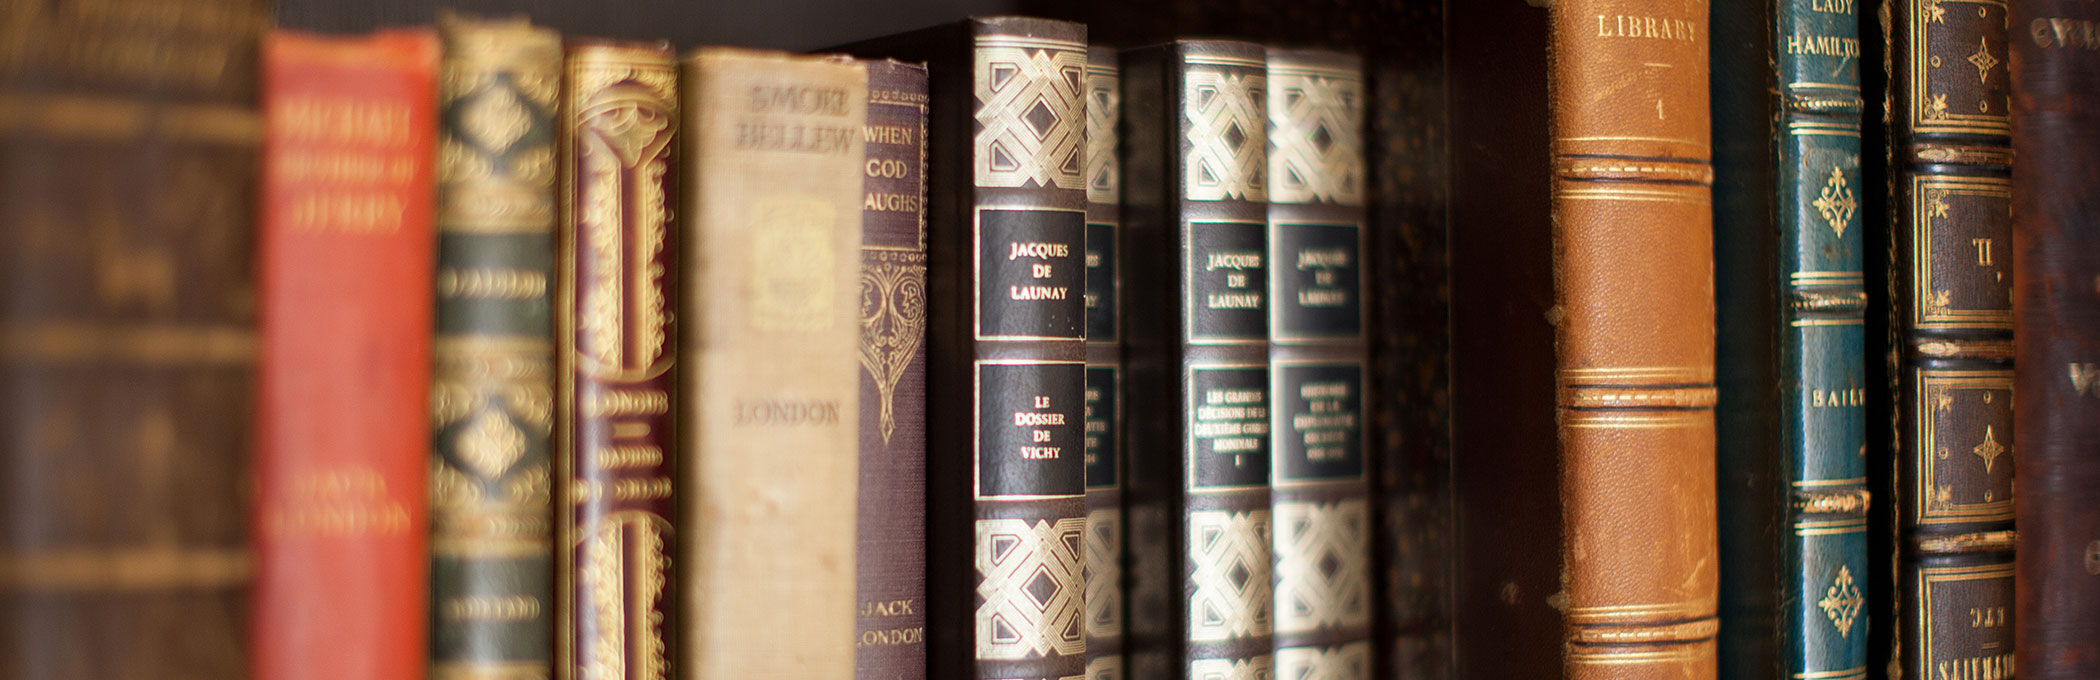 Old books on shelf 